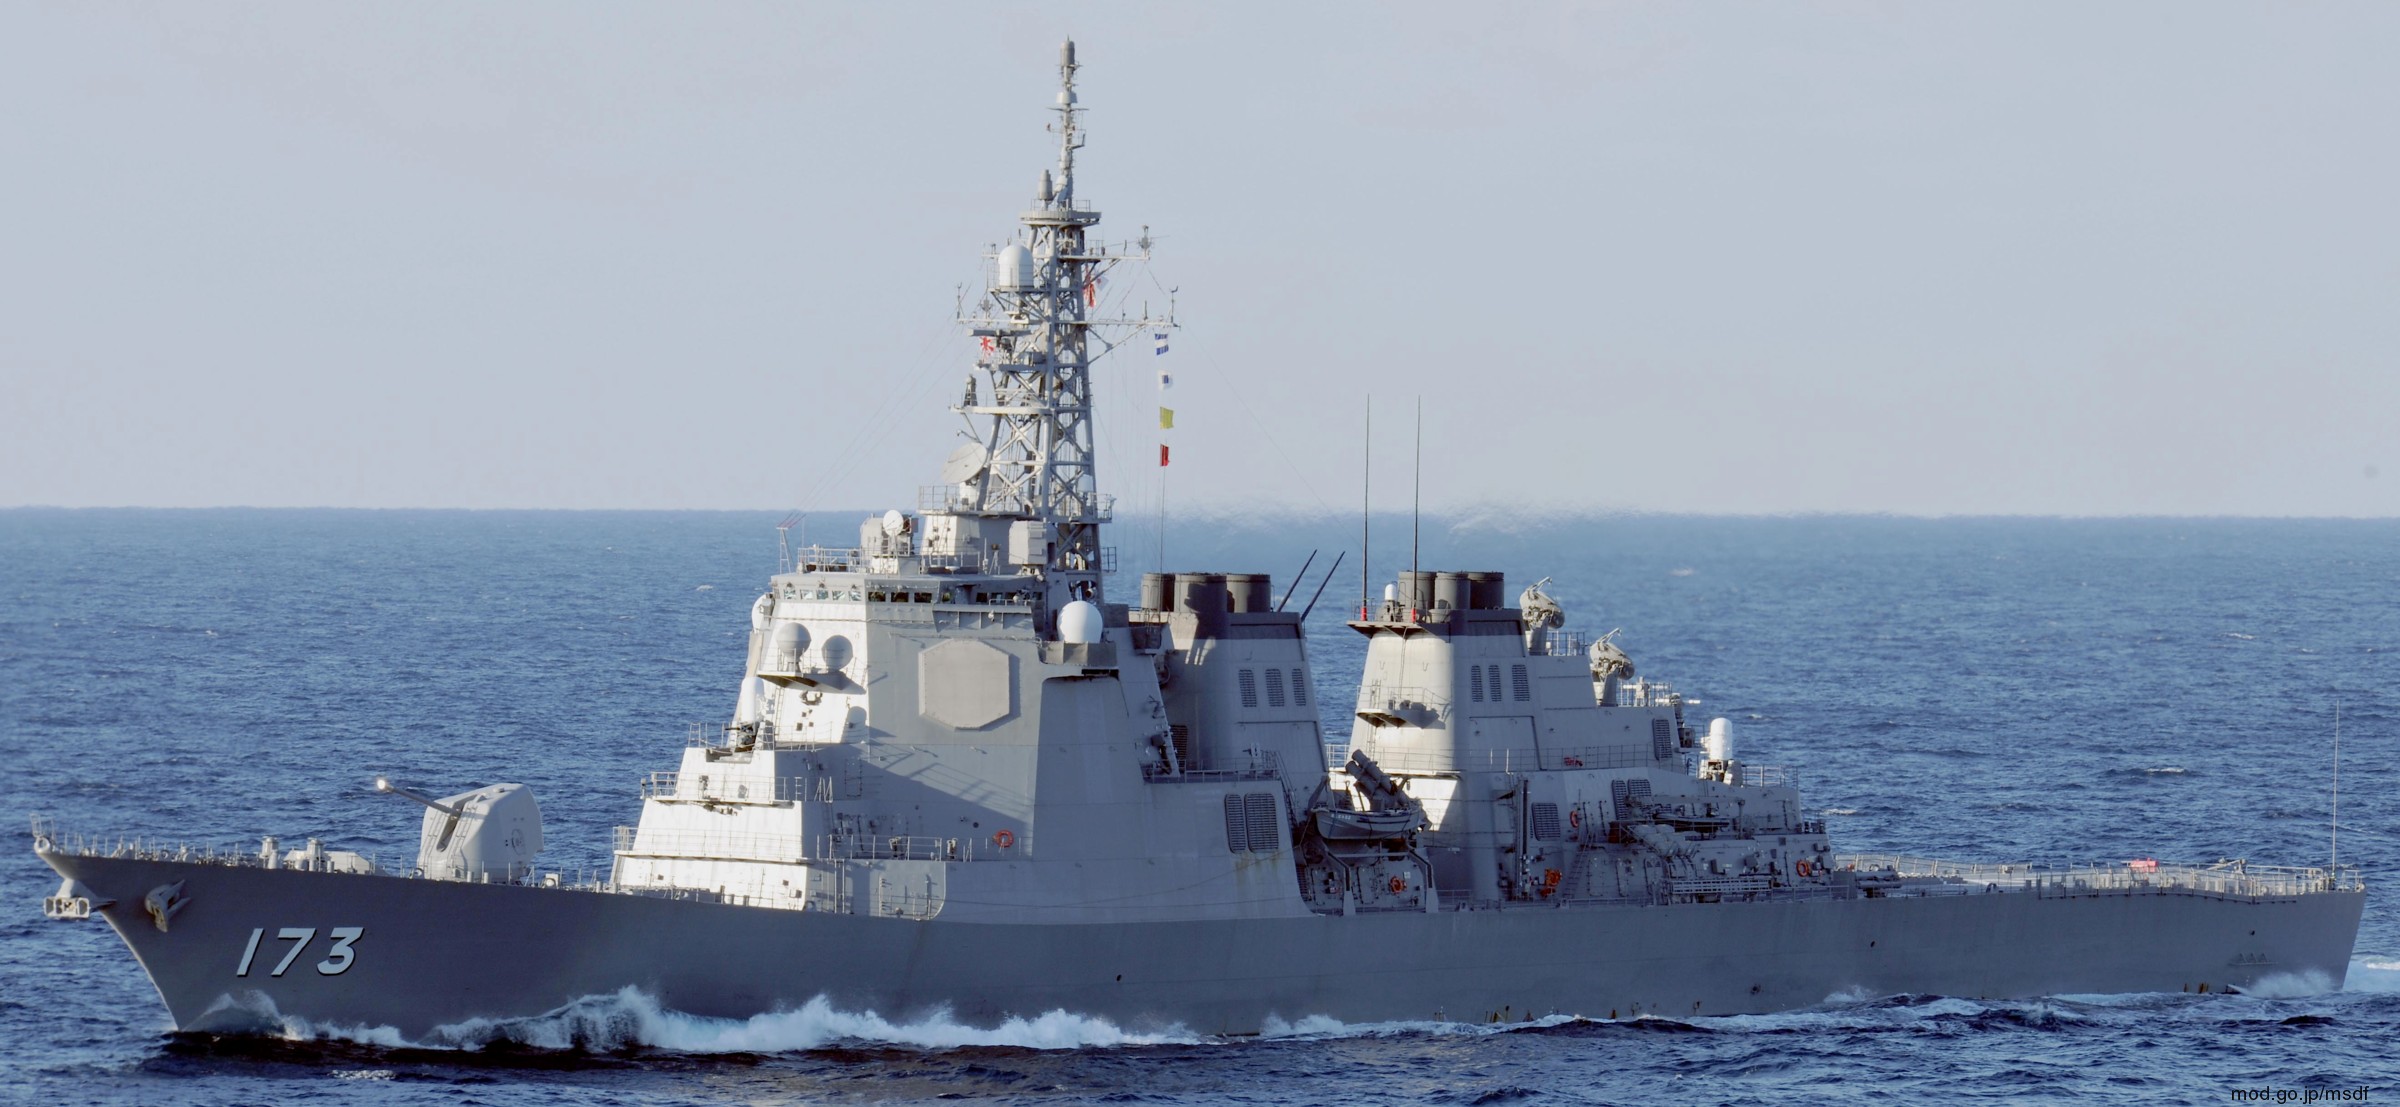 ddg-173 js kongo class guided missile destroyer aegis japan maritime self defense force jmsdf 03